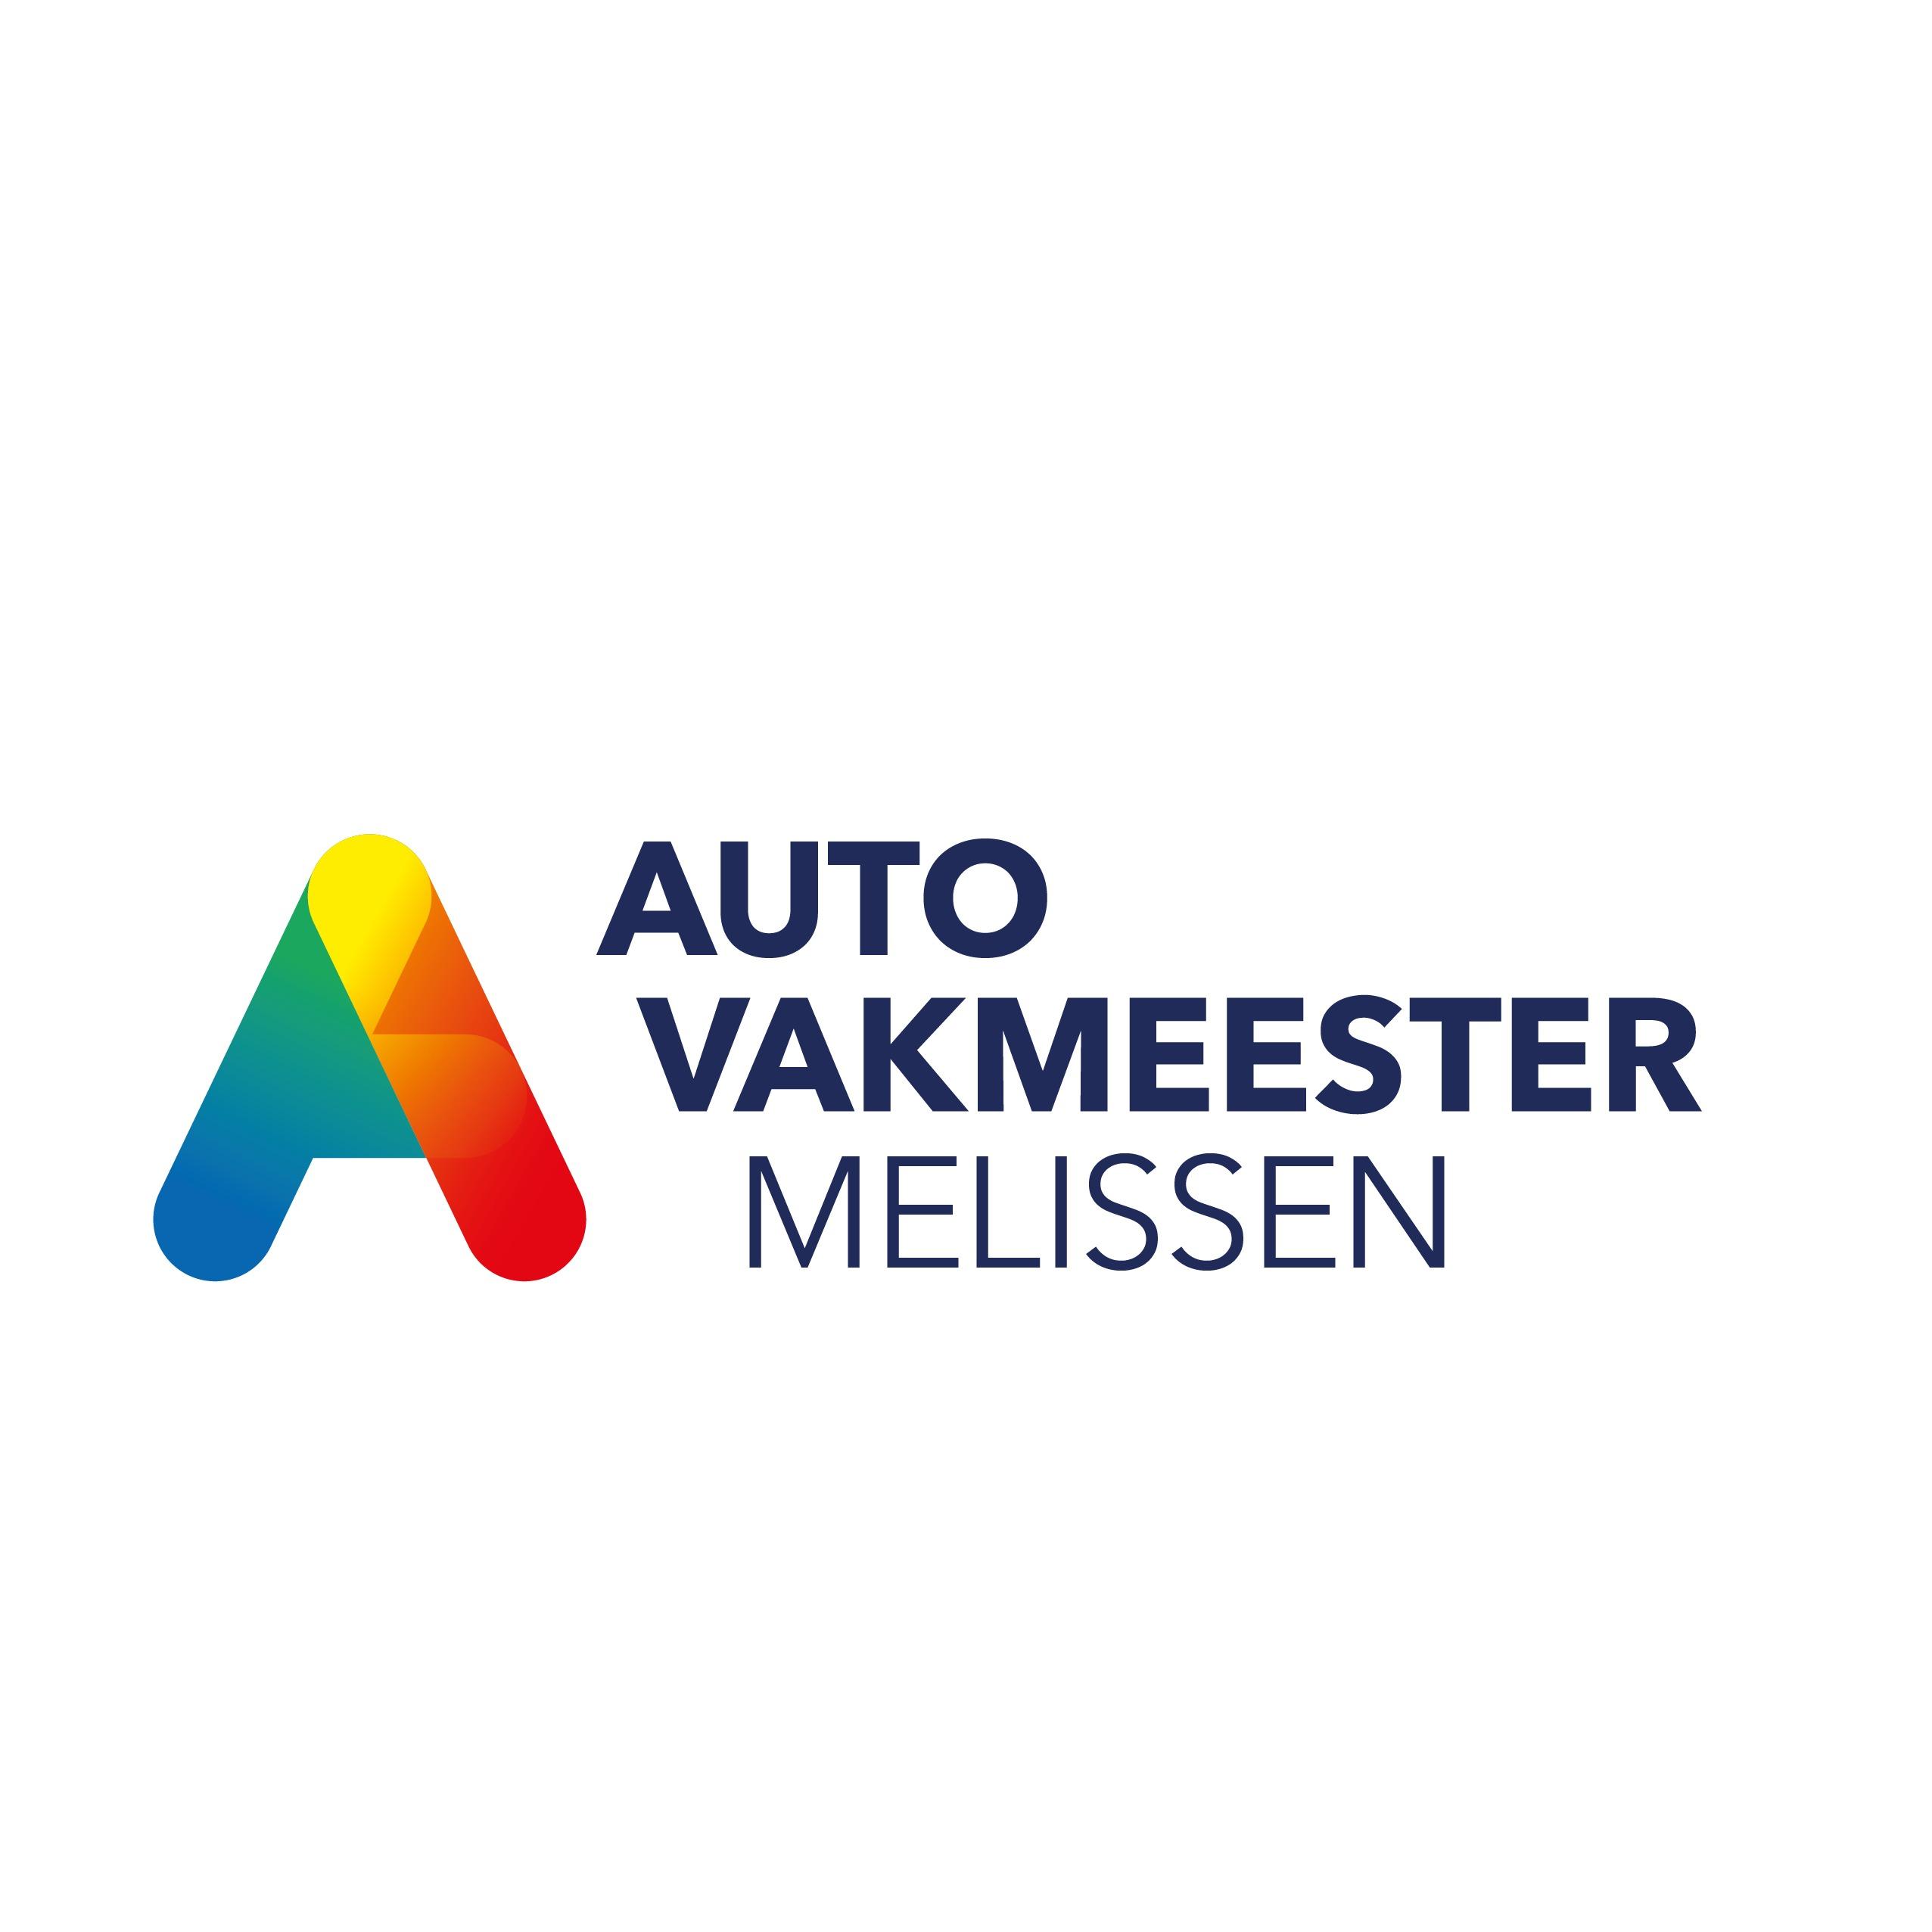 Autovakmeester Melissen Logo